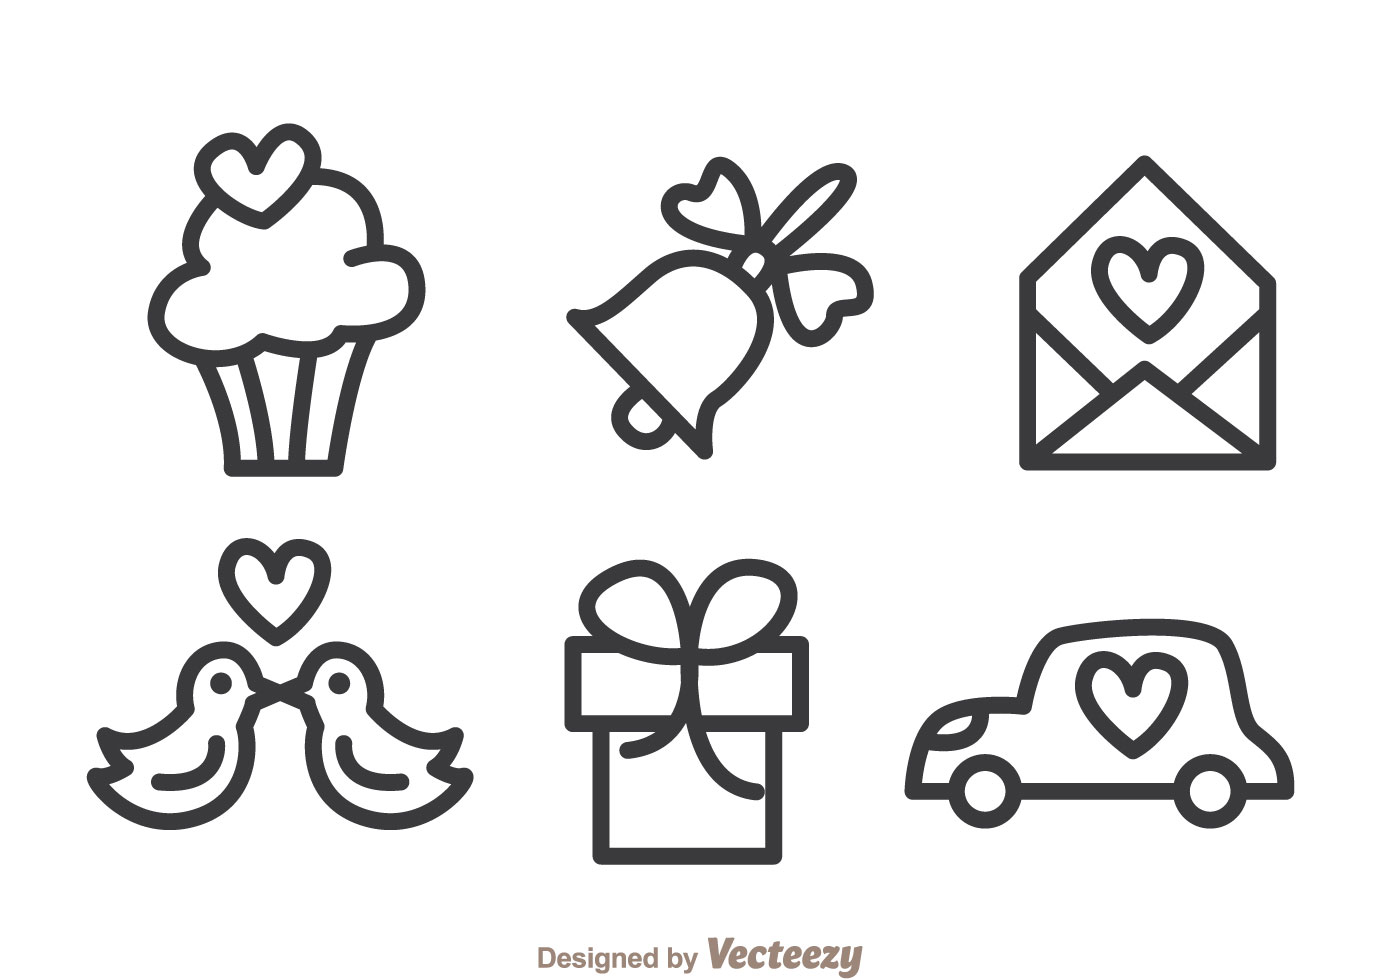 Download Wedding Outline Icons - Download Free Vectors, Clipart Graphics & Vector Art